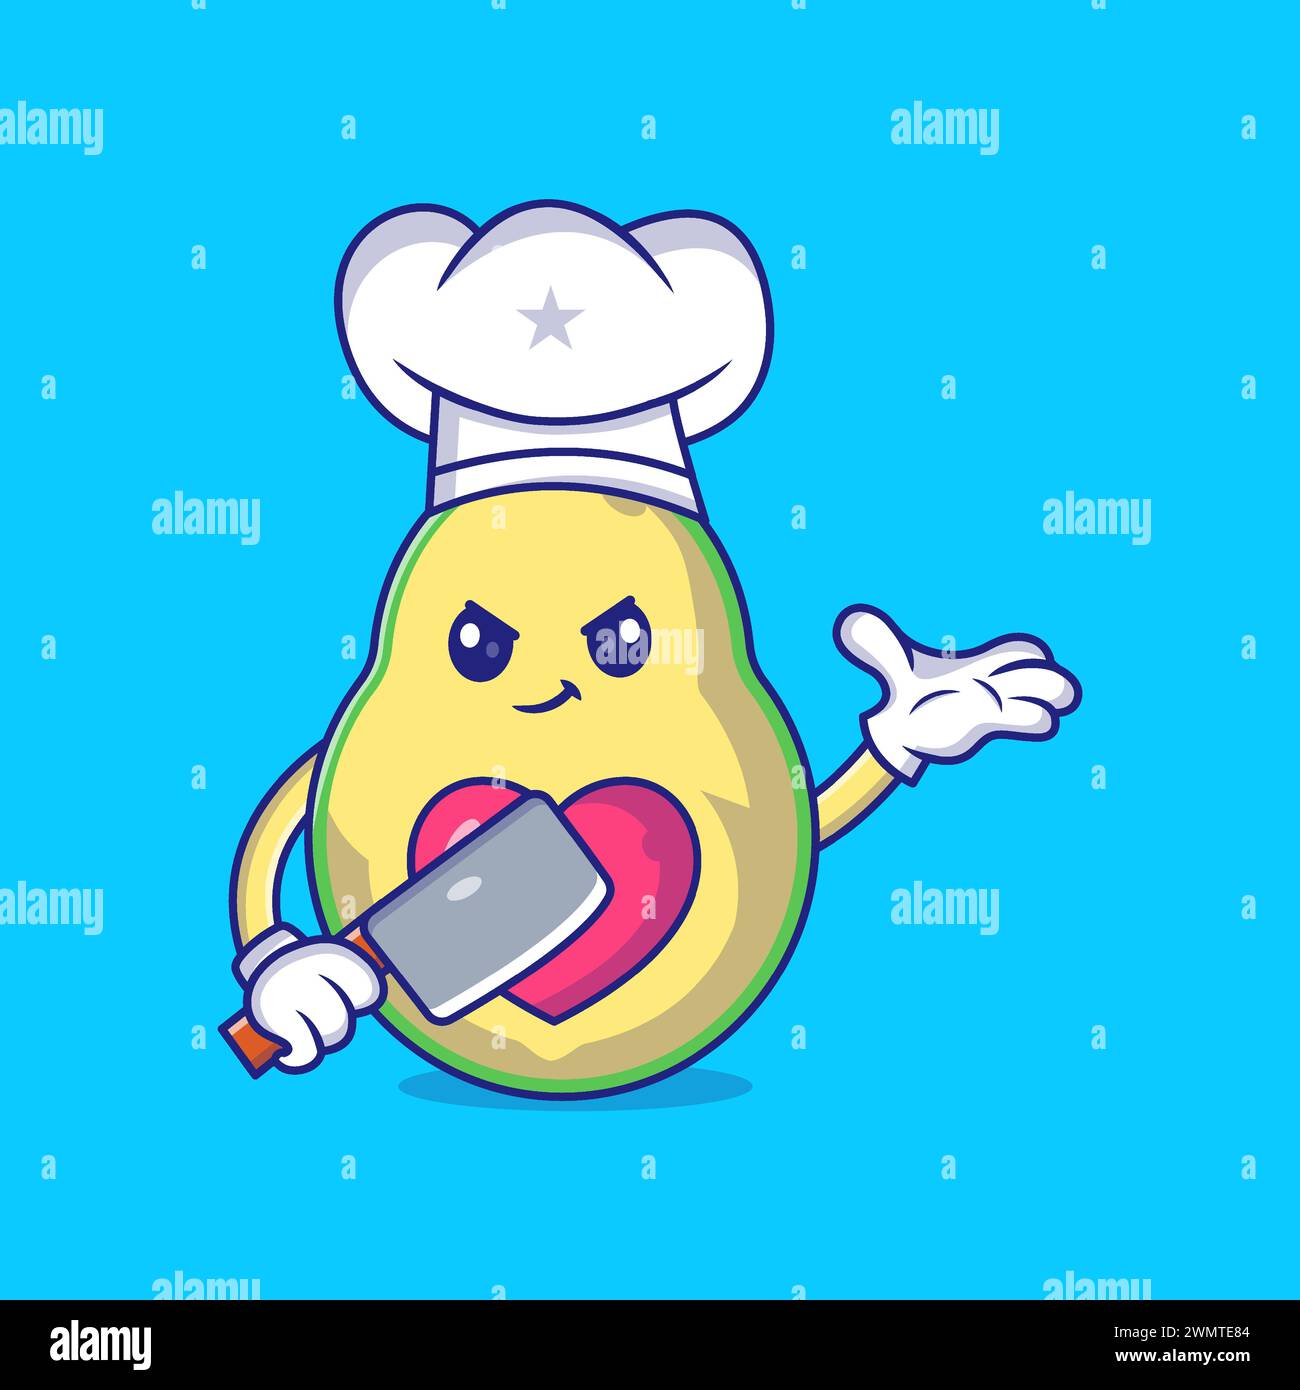 Cute Avocado Holding Hammer Mascot Character Vector Icon Illustration Stock Vector